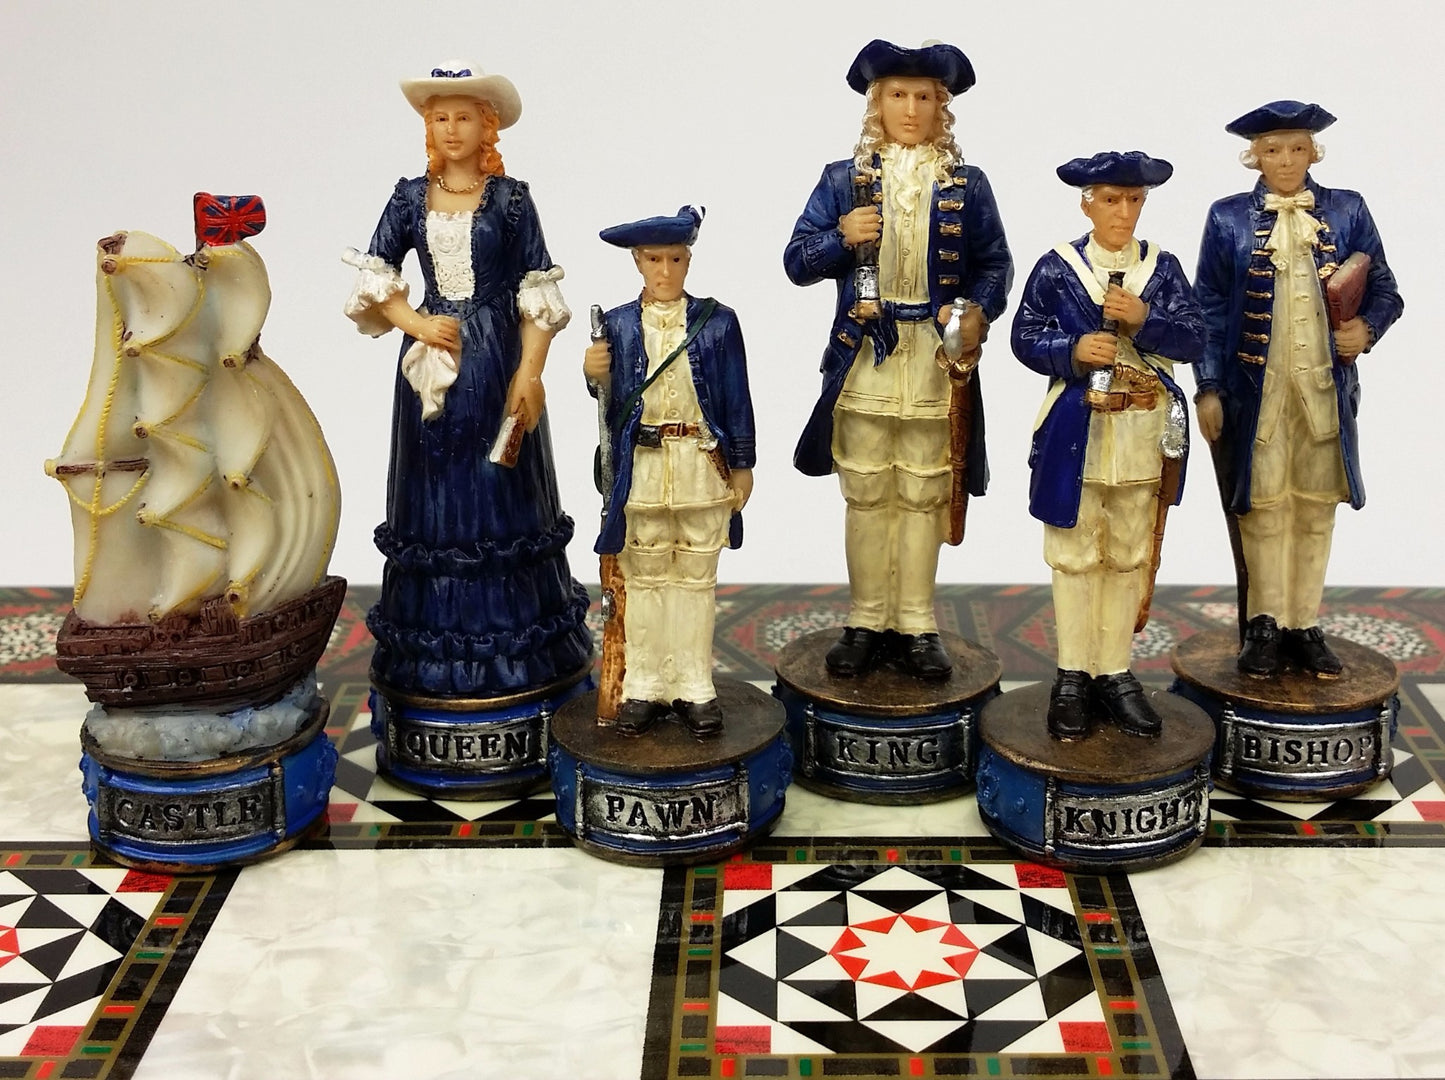 Pirates vs Royal Navy Pirate Chess Set W/ 17" Mosaic Color Board